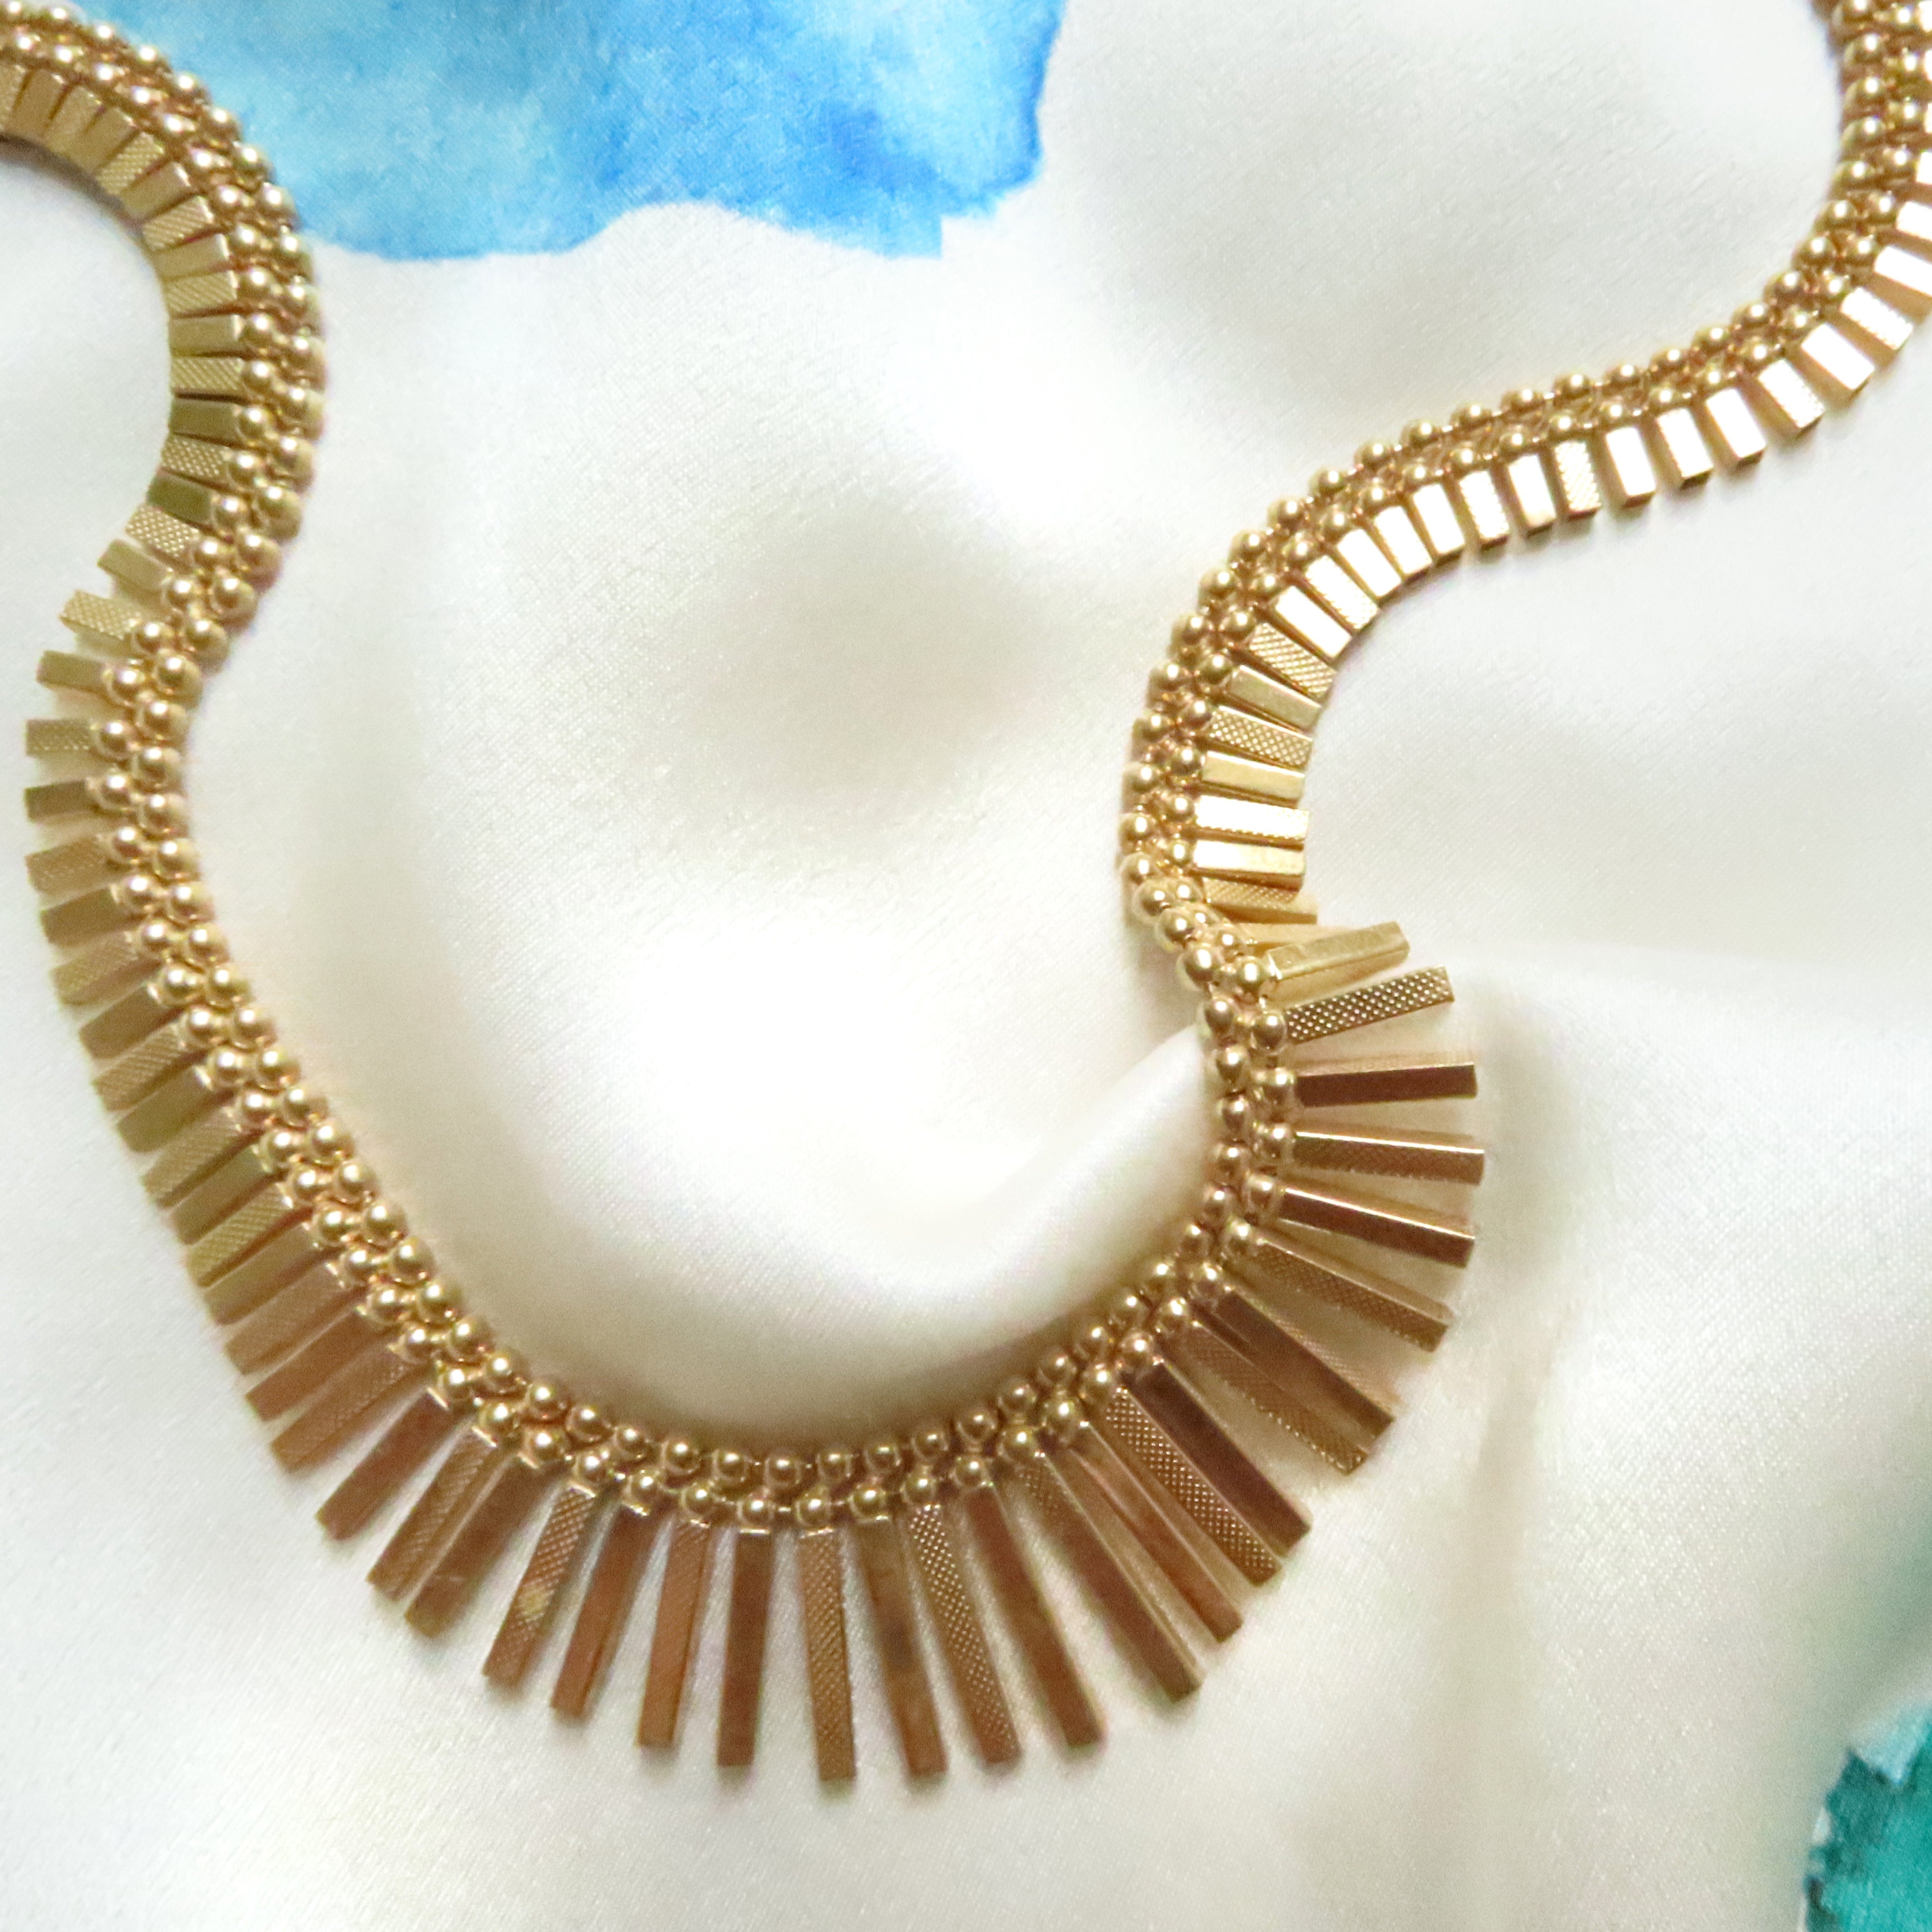 1980s cleopatra fringe necklace 9ct gold